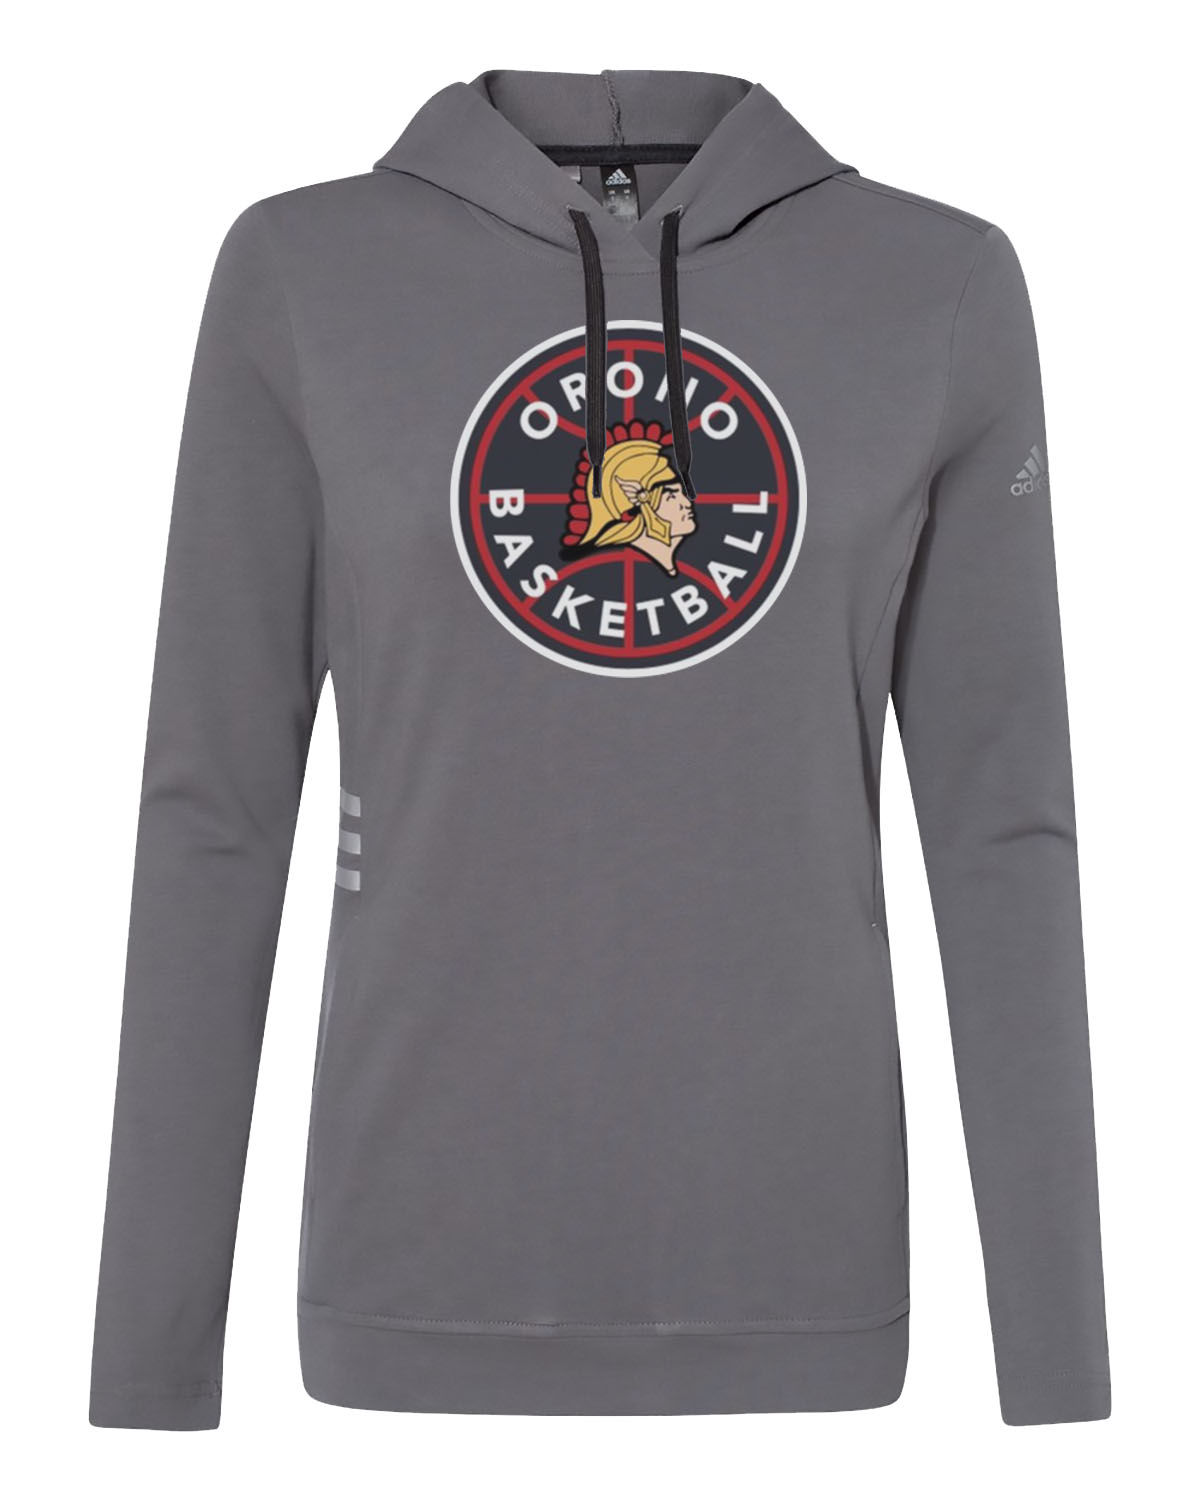 Orono Basketball // Women's Lightweight Hoodie - Adidas